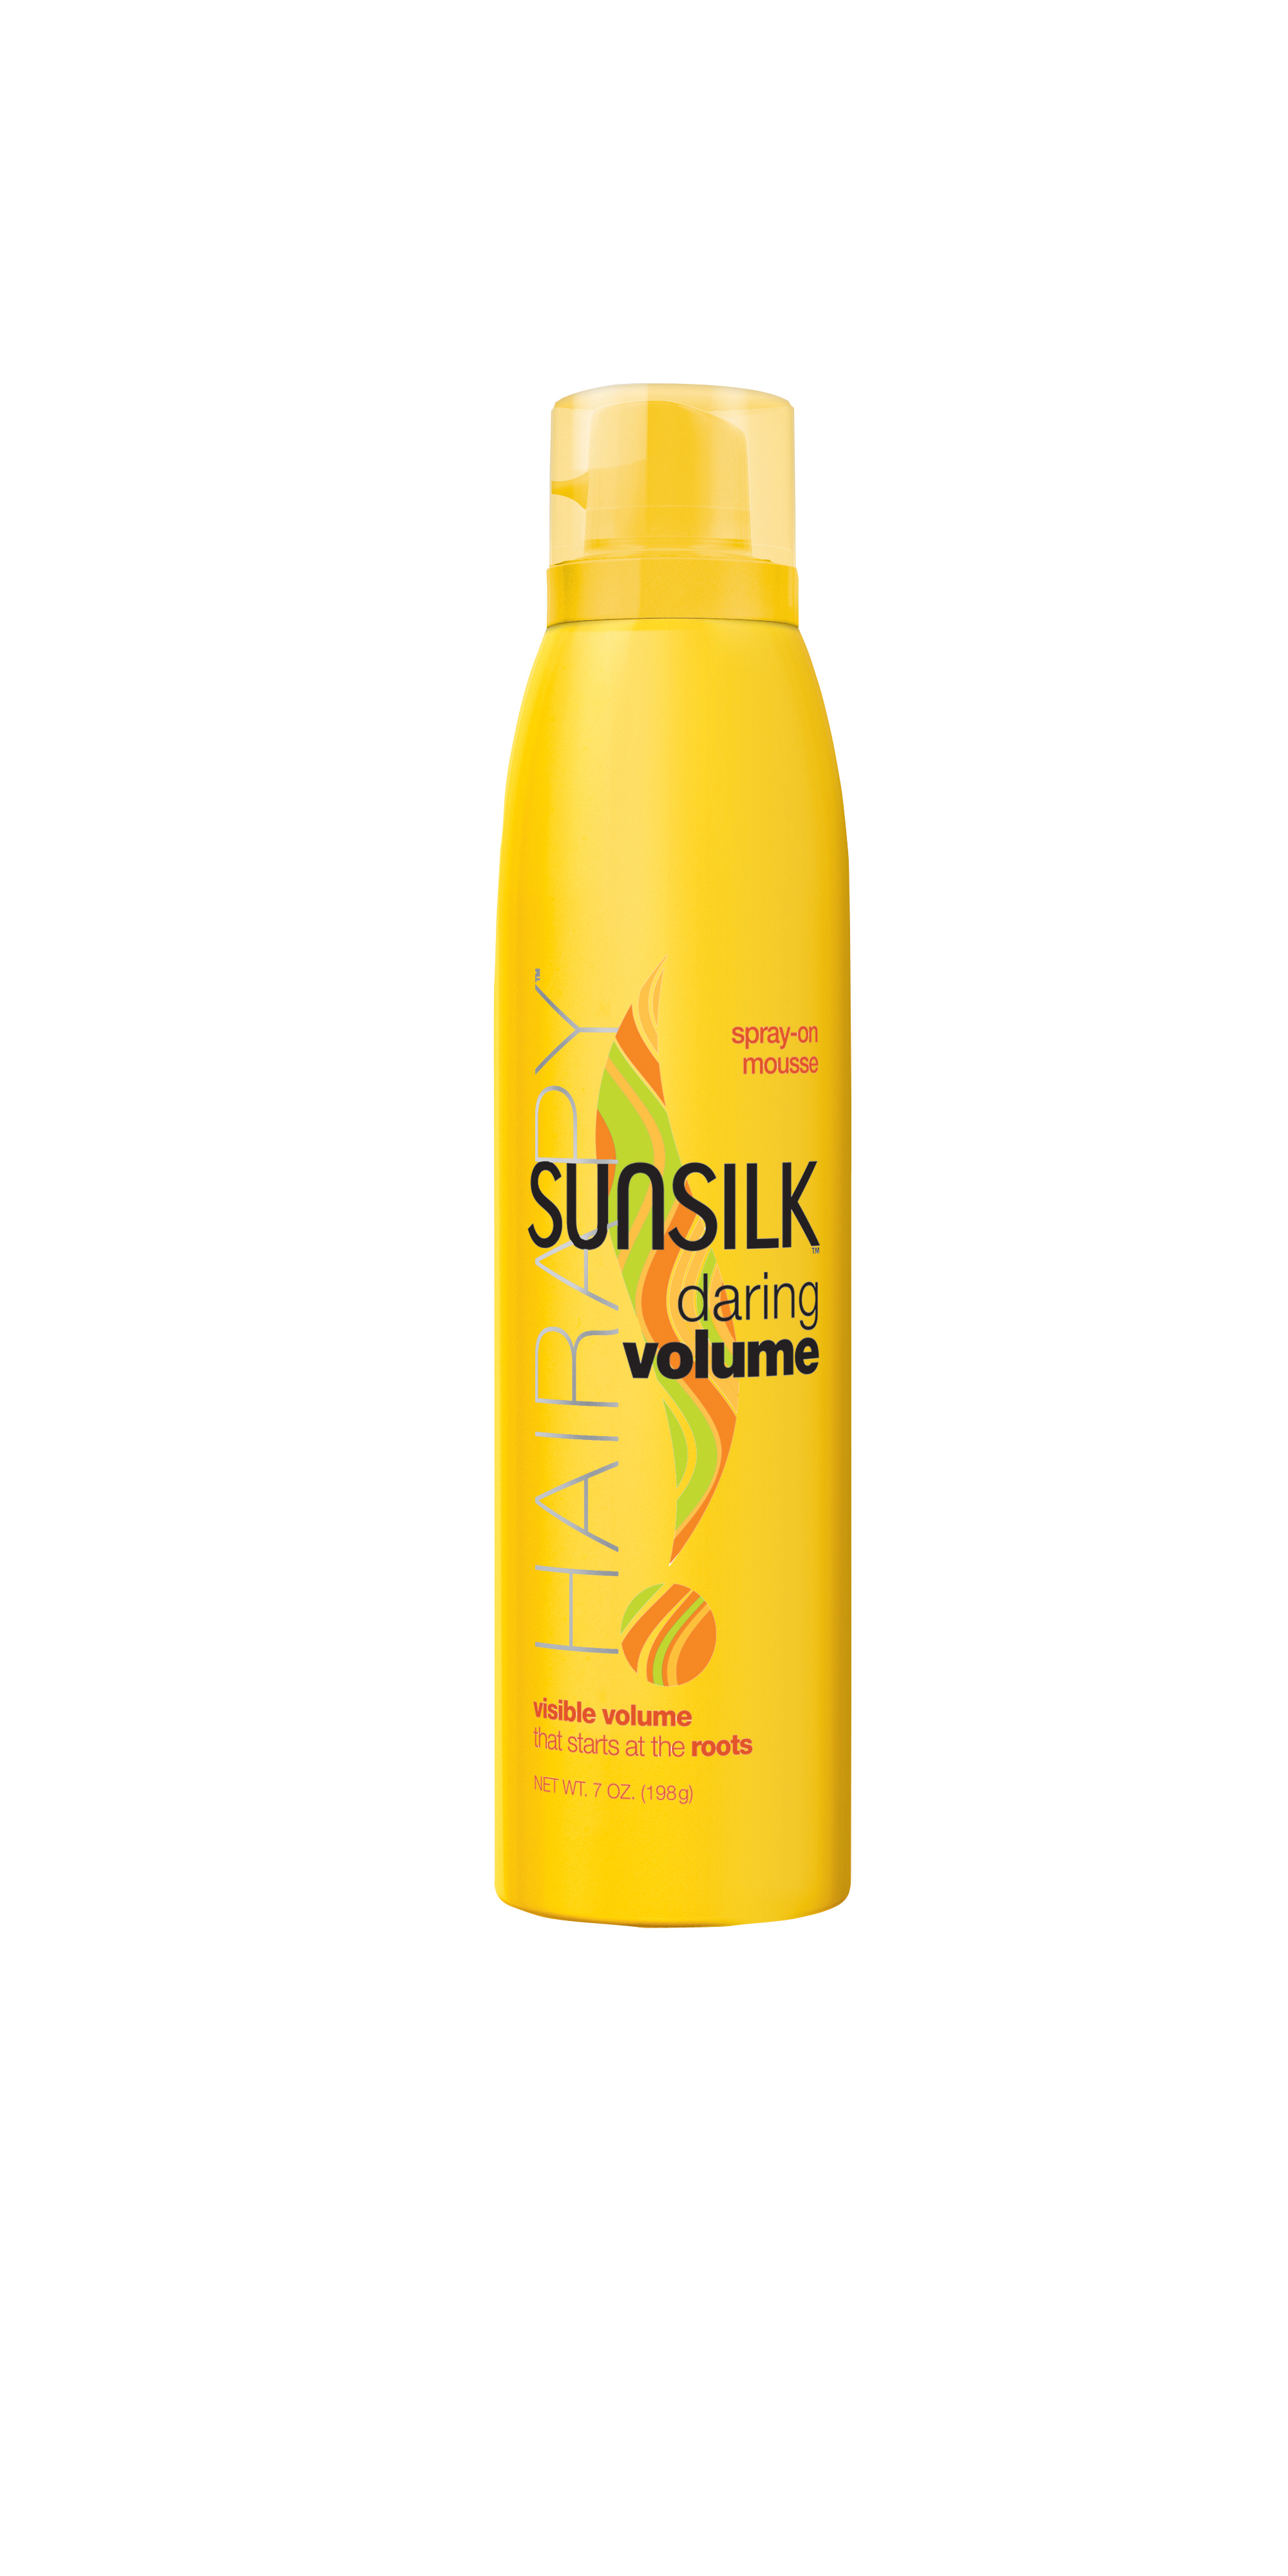 Sunsilk Daring volume Spray-on Mousse